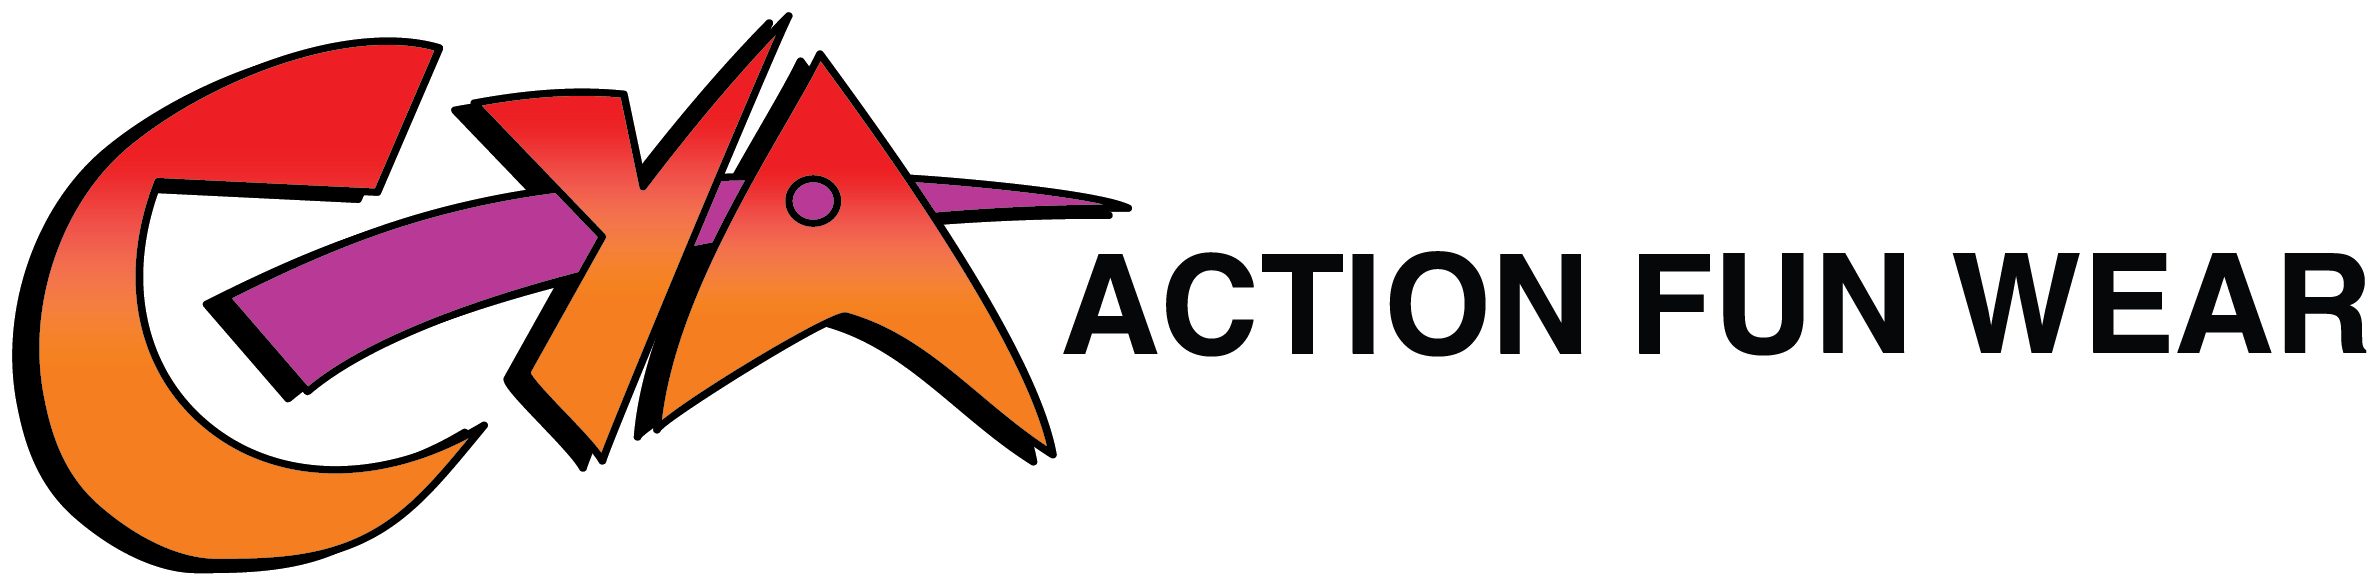 CYA Action Funwear, Patchogue, NY 's Logo